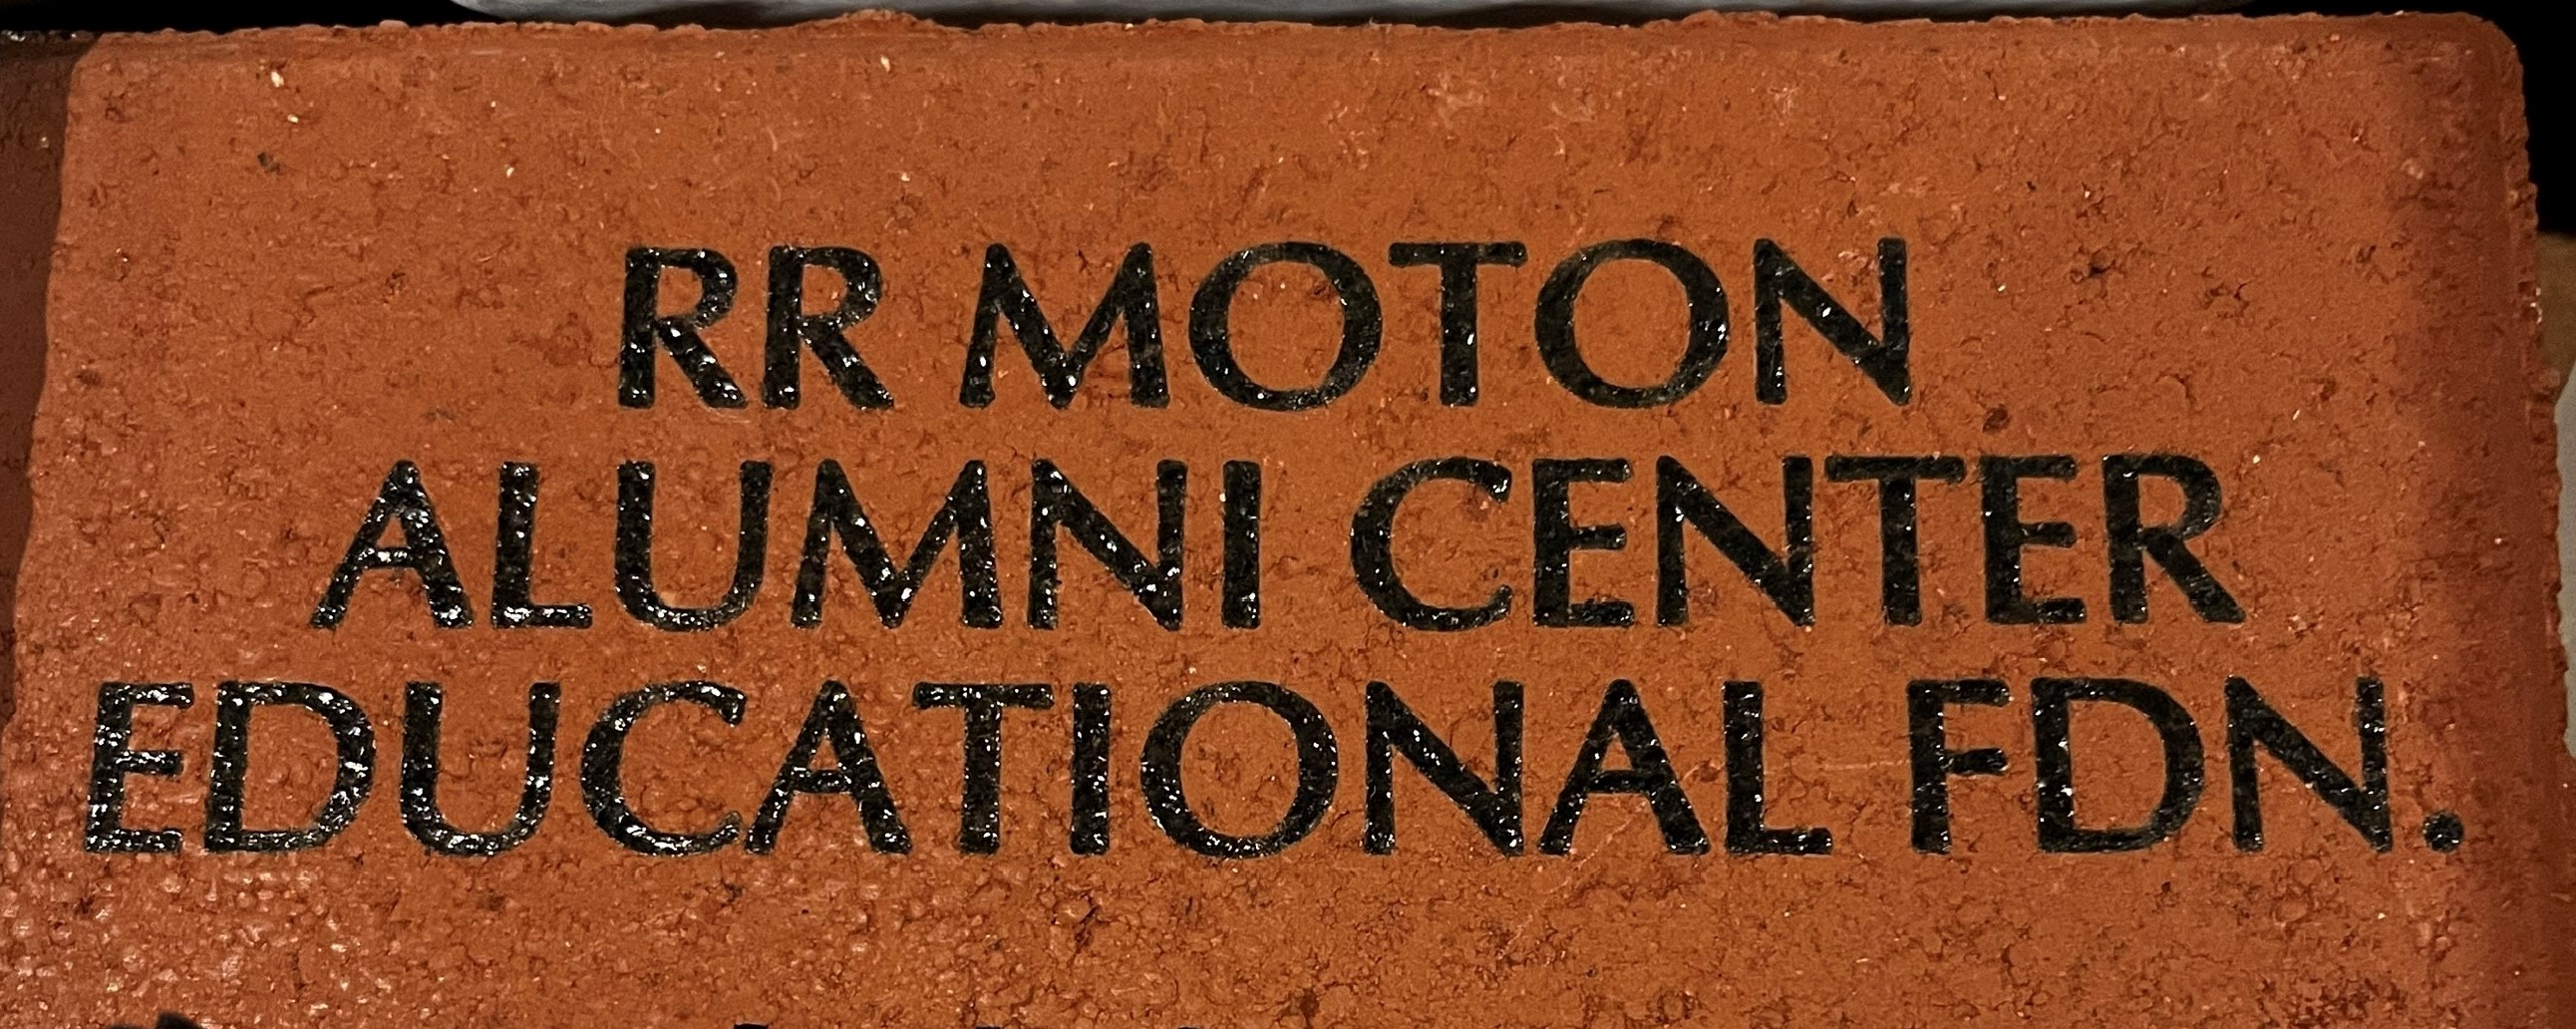 RR MOTON ALUMNI EDUCATIONAL CENTER FOUNDATION